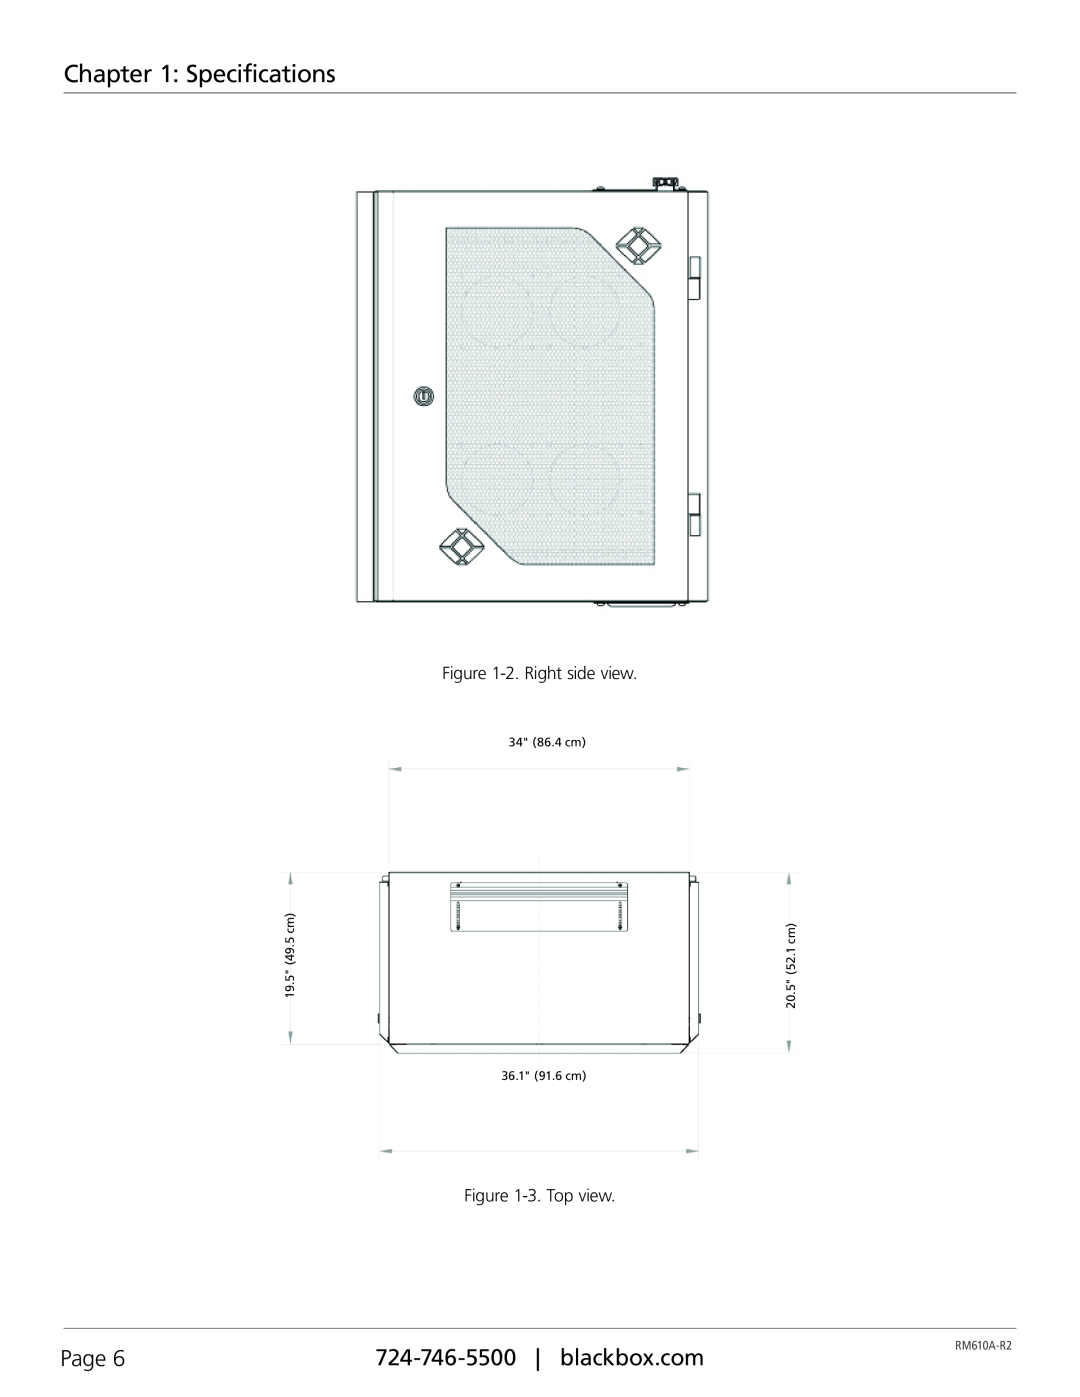 Black Box RM610A-R2, Server Side-Mount Wall Cabinet Specifications, 34 86.4 cm, 19.5 49.5 cm, 20.5 52.1 cm, 36.1 91.6 cm 